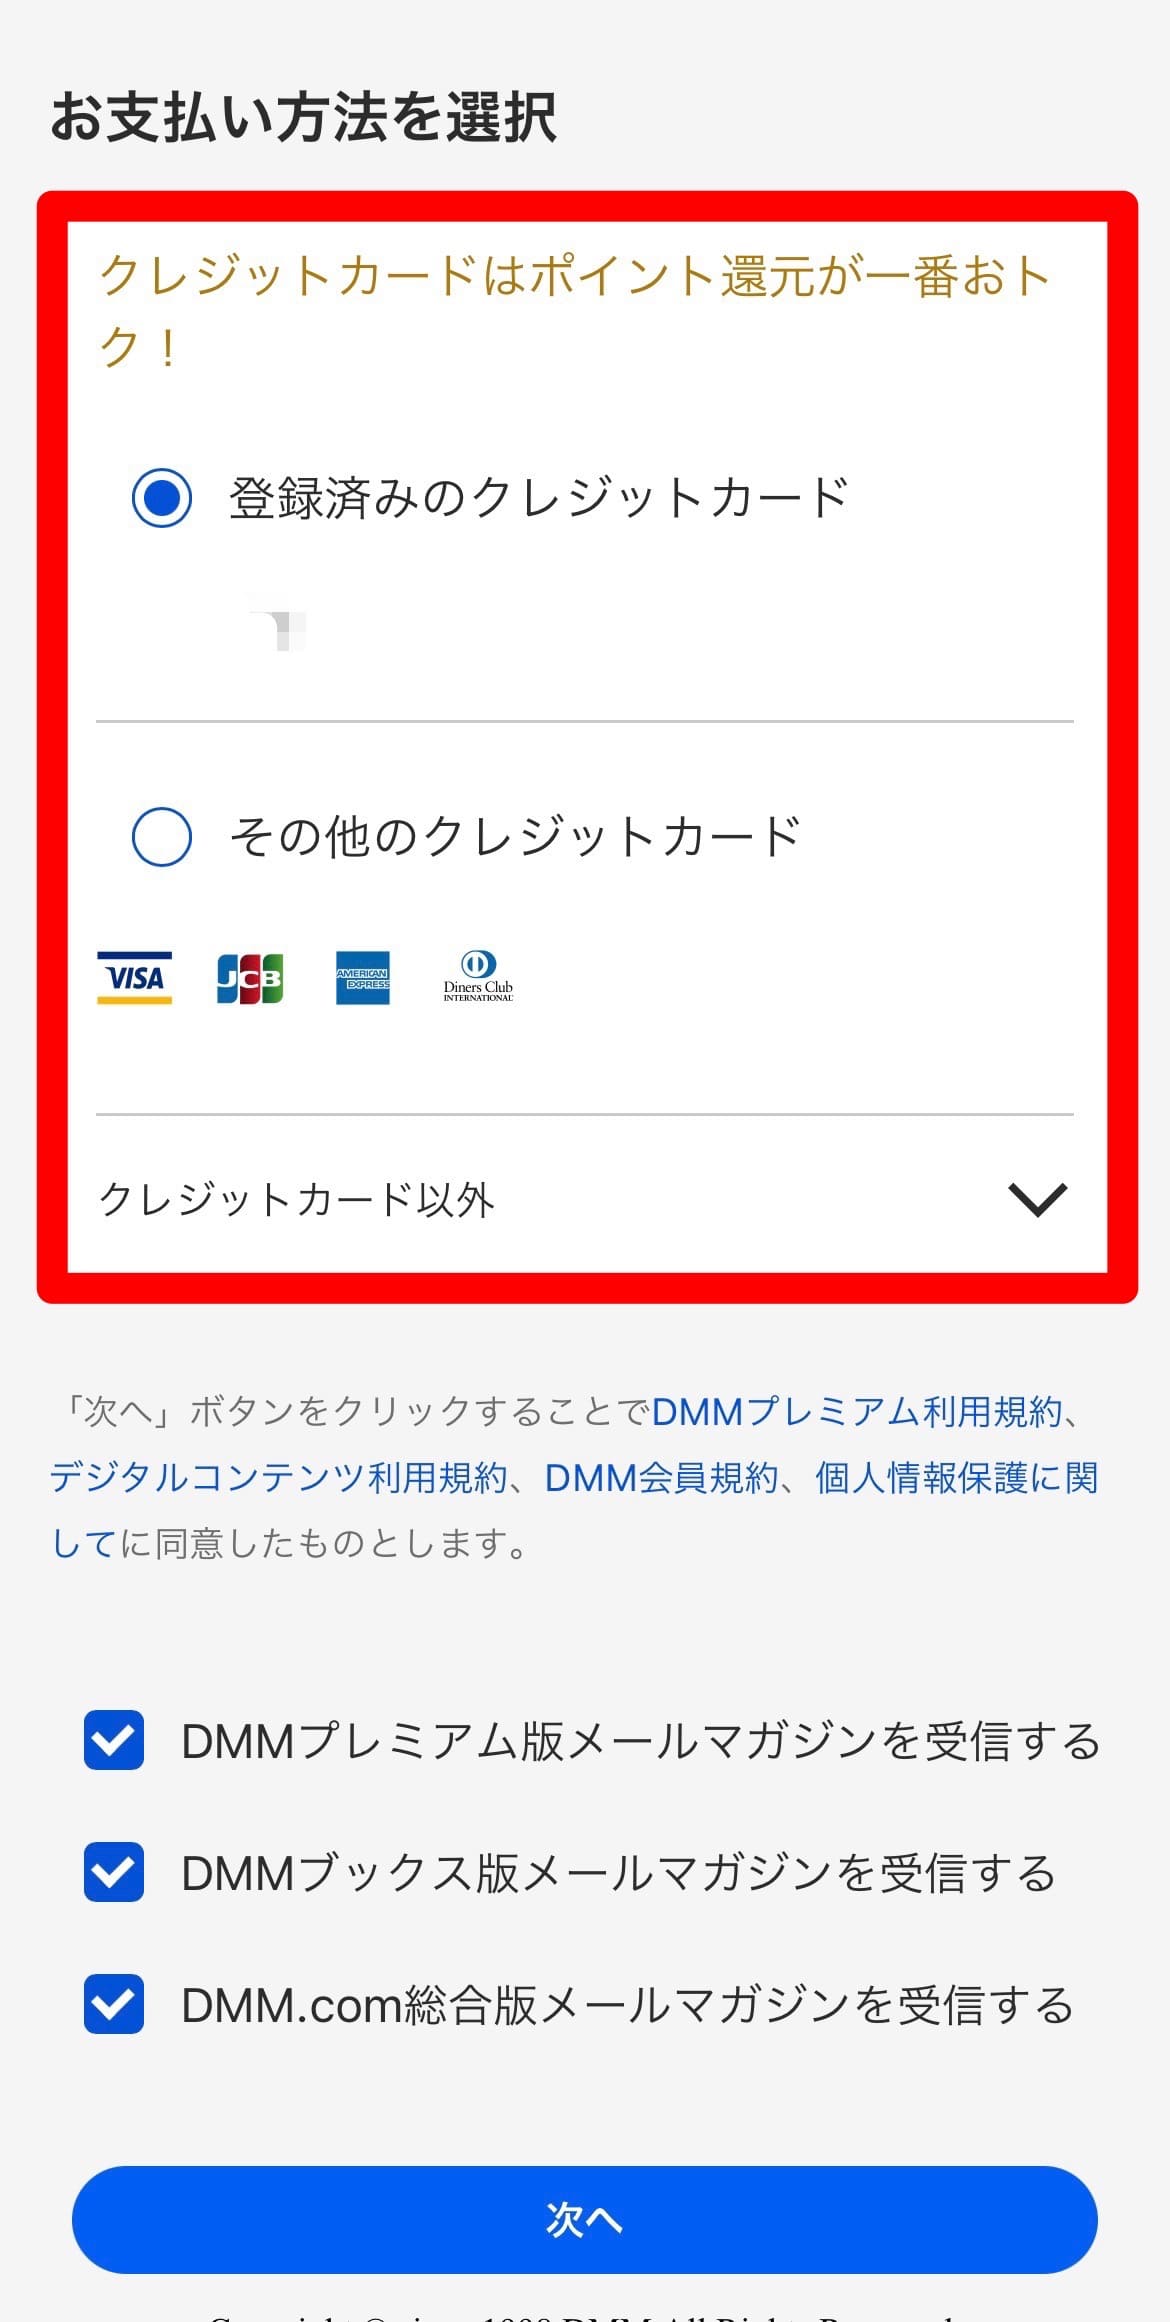 DMMTV 登録方法